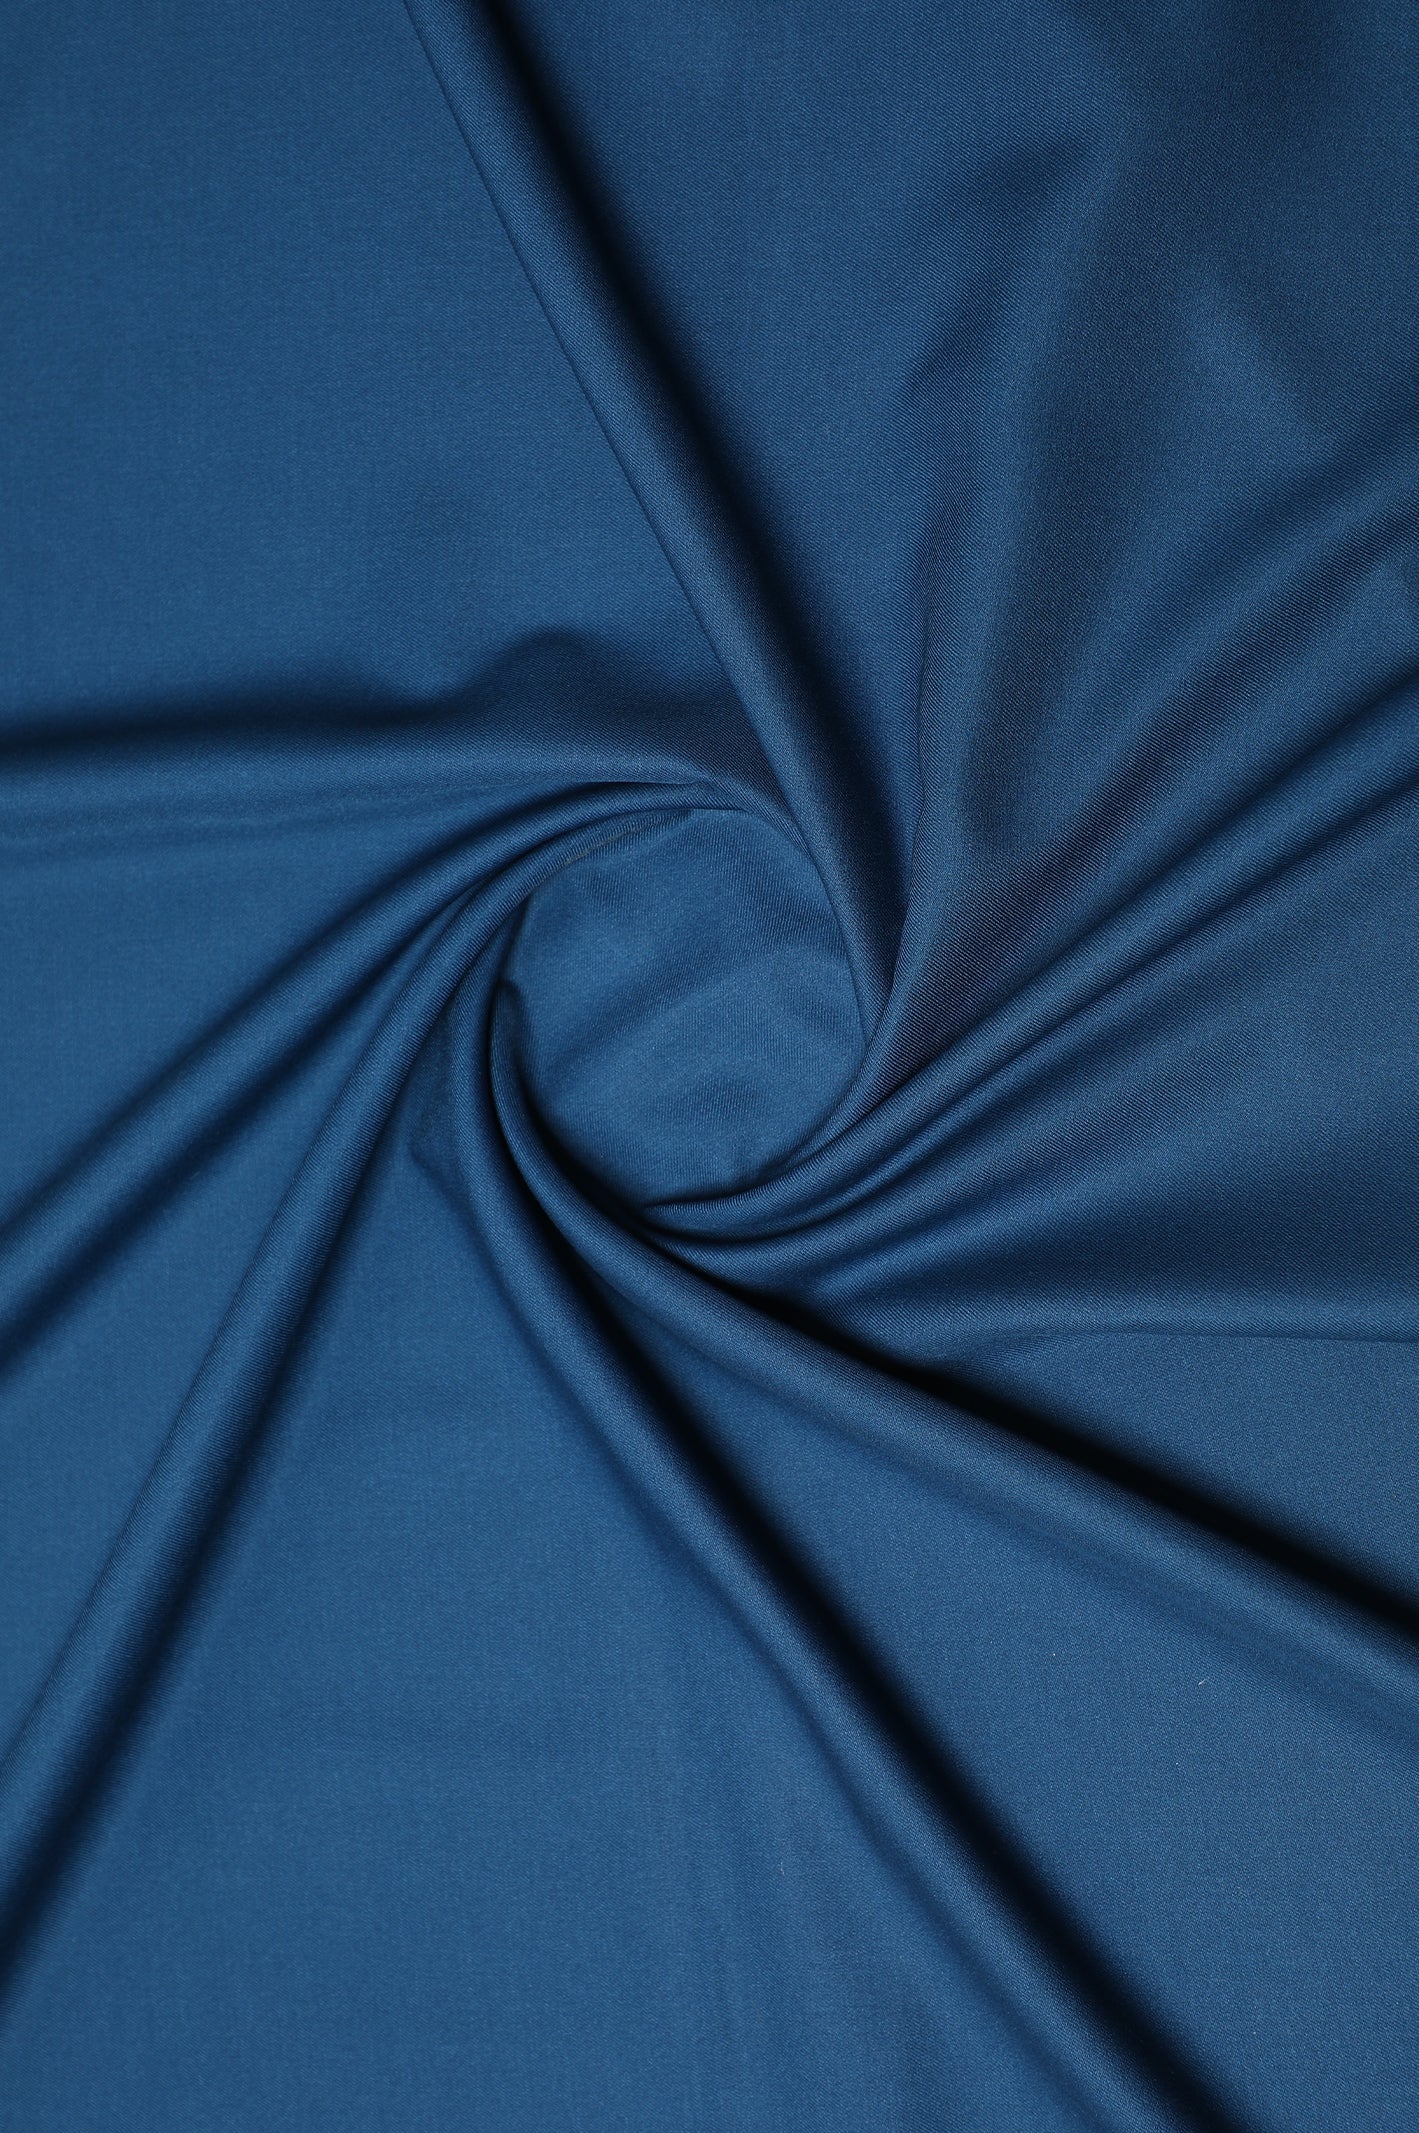 Unstitched Fabric for Men SKU: US0230-D-BLUE - Diners